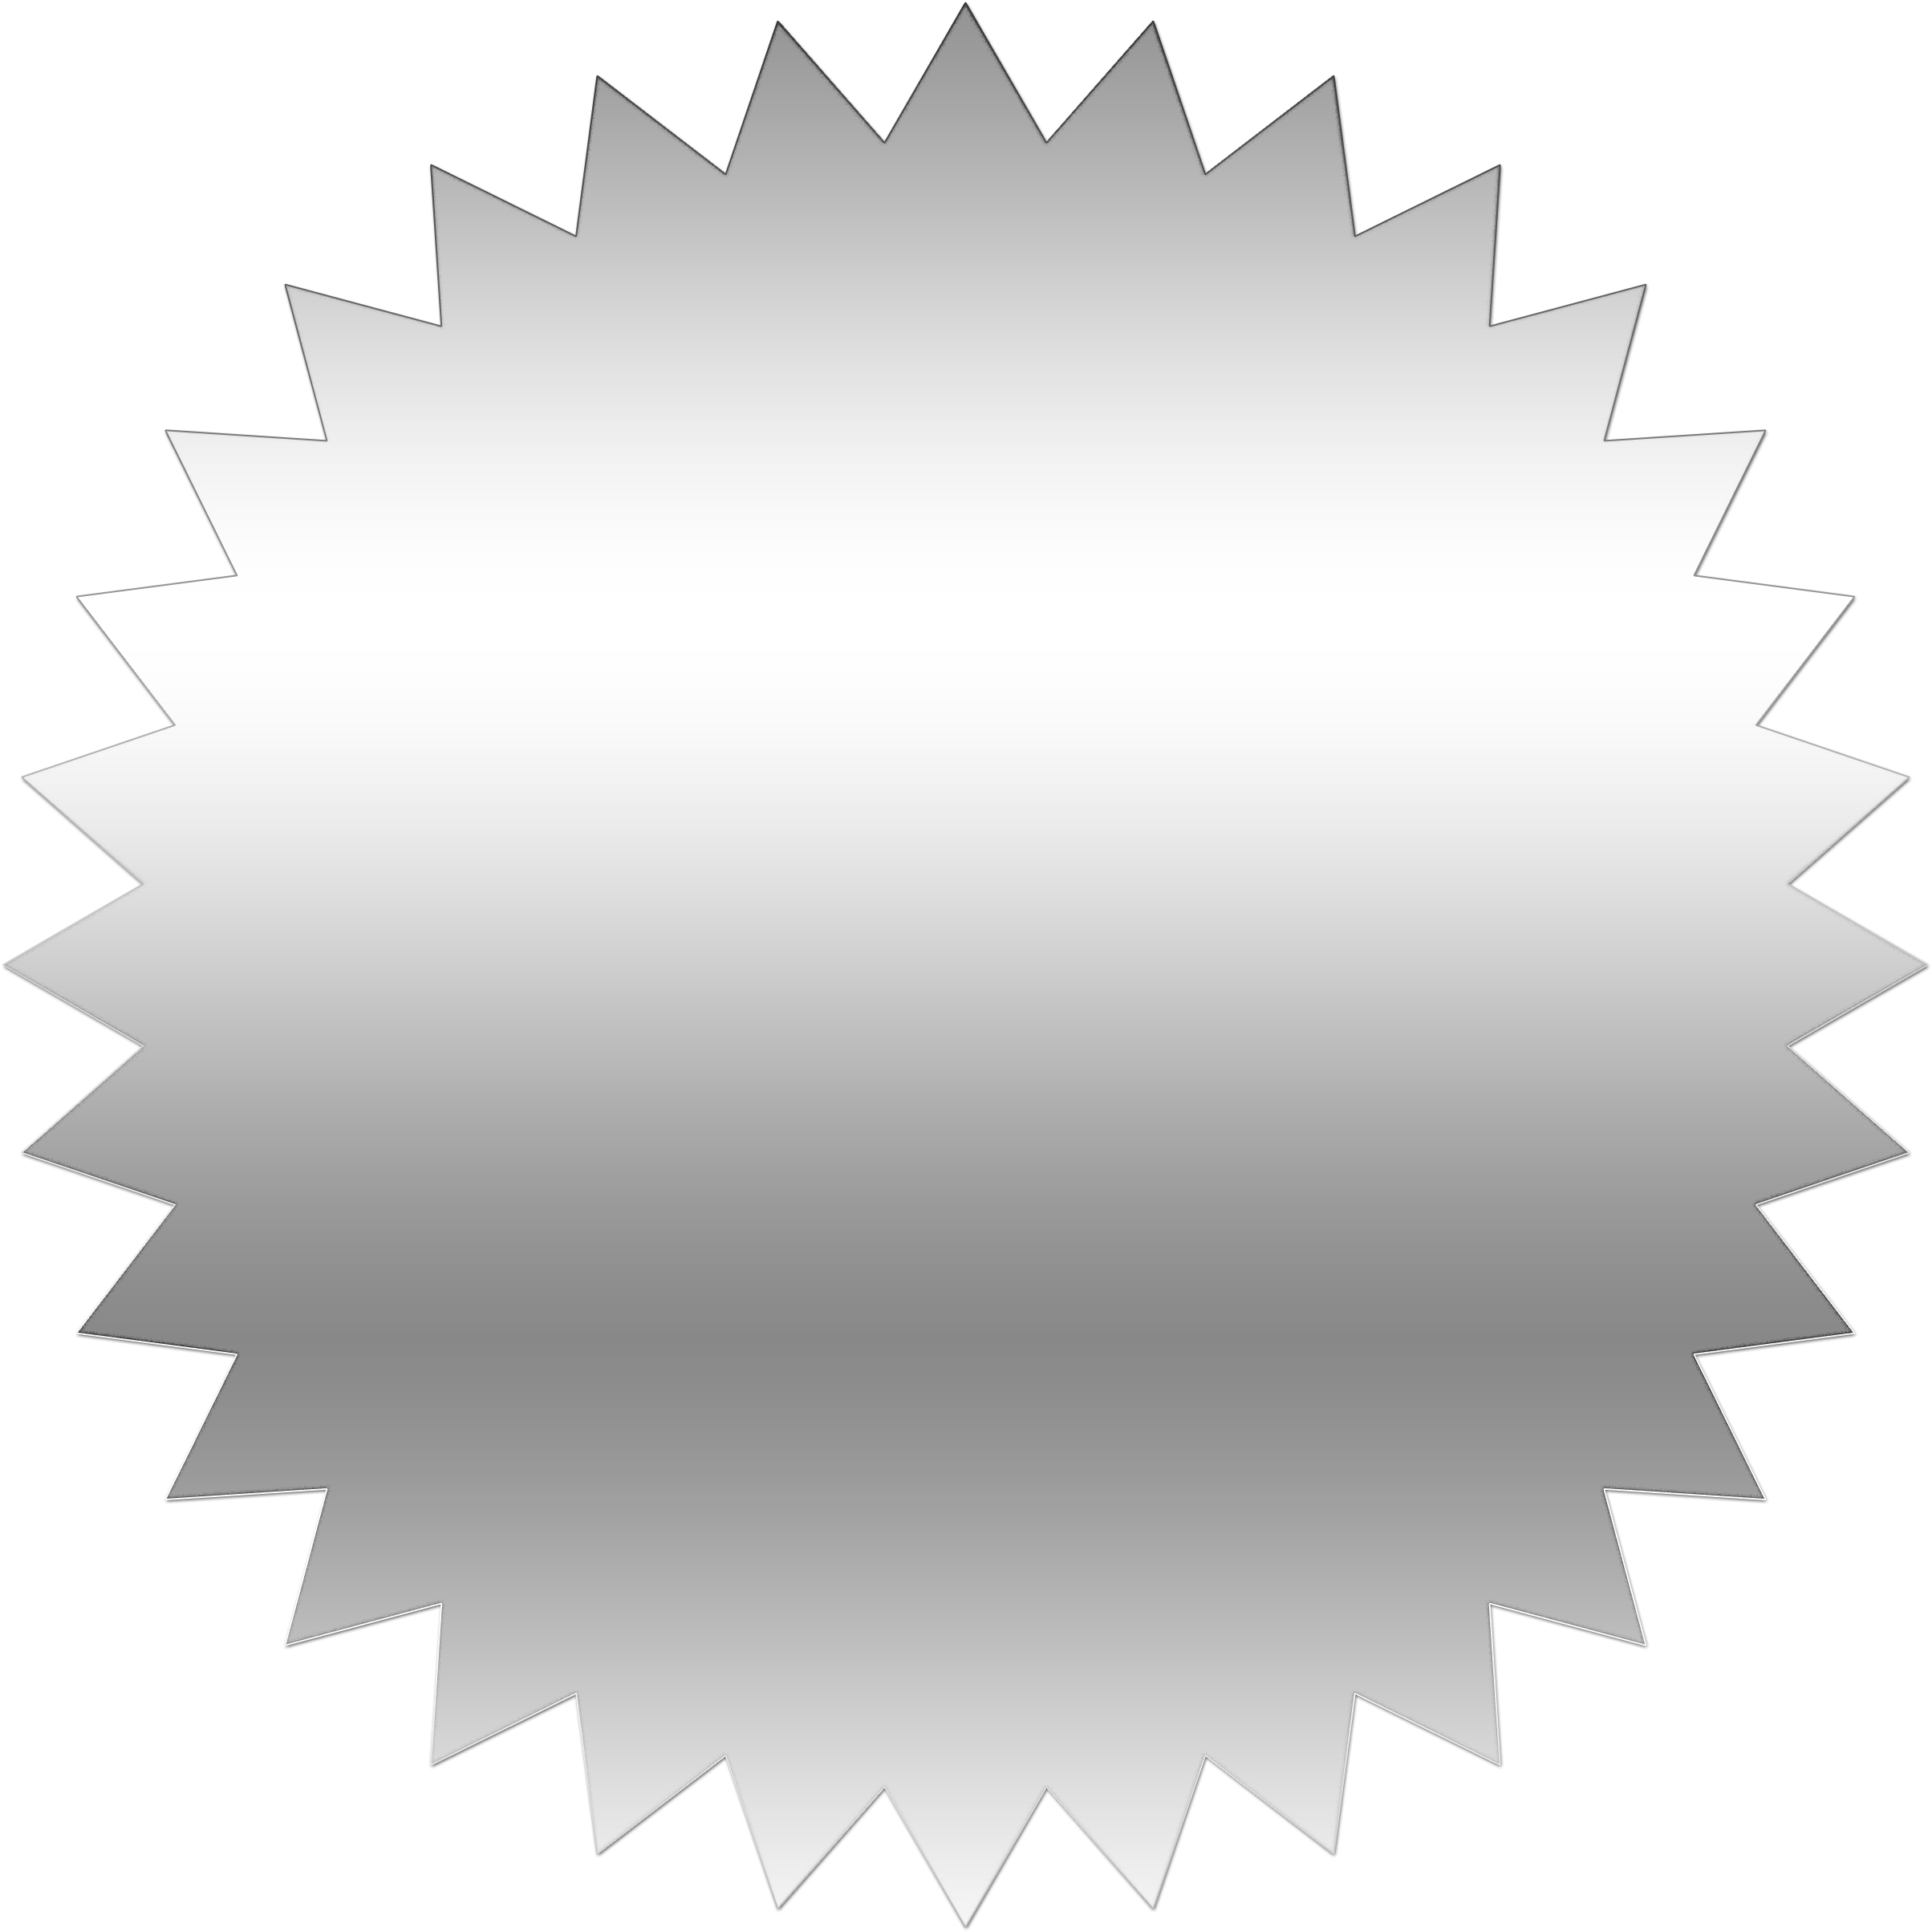 A White Starburst With Black Background